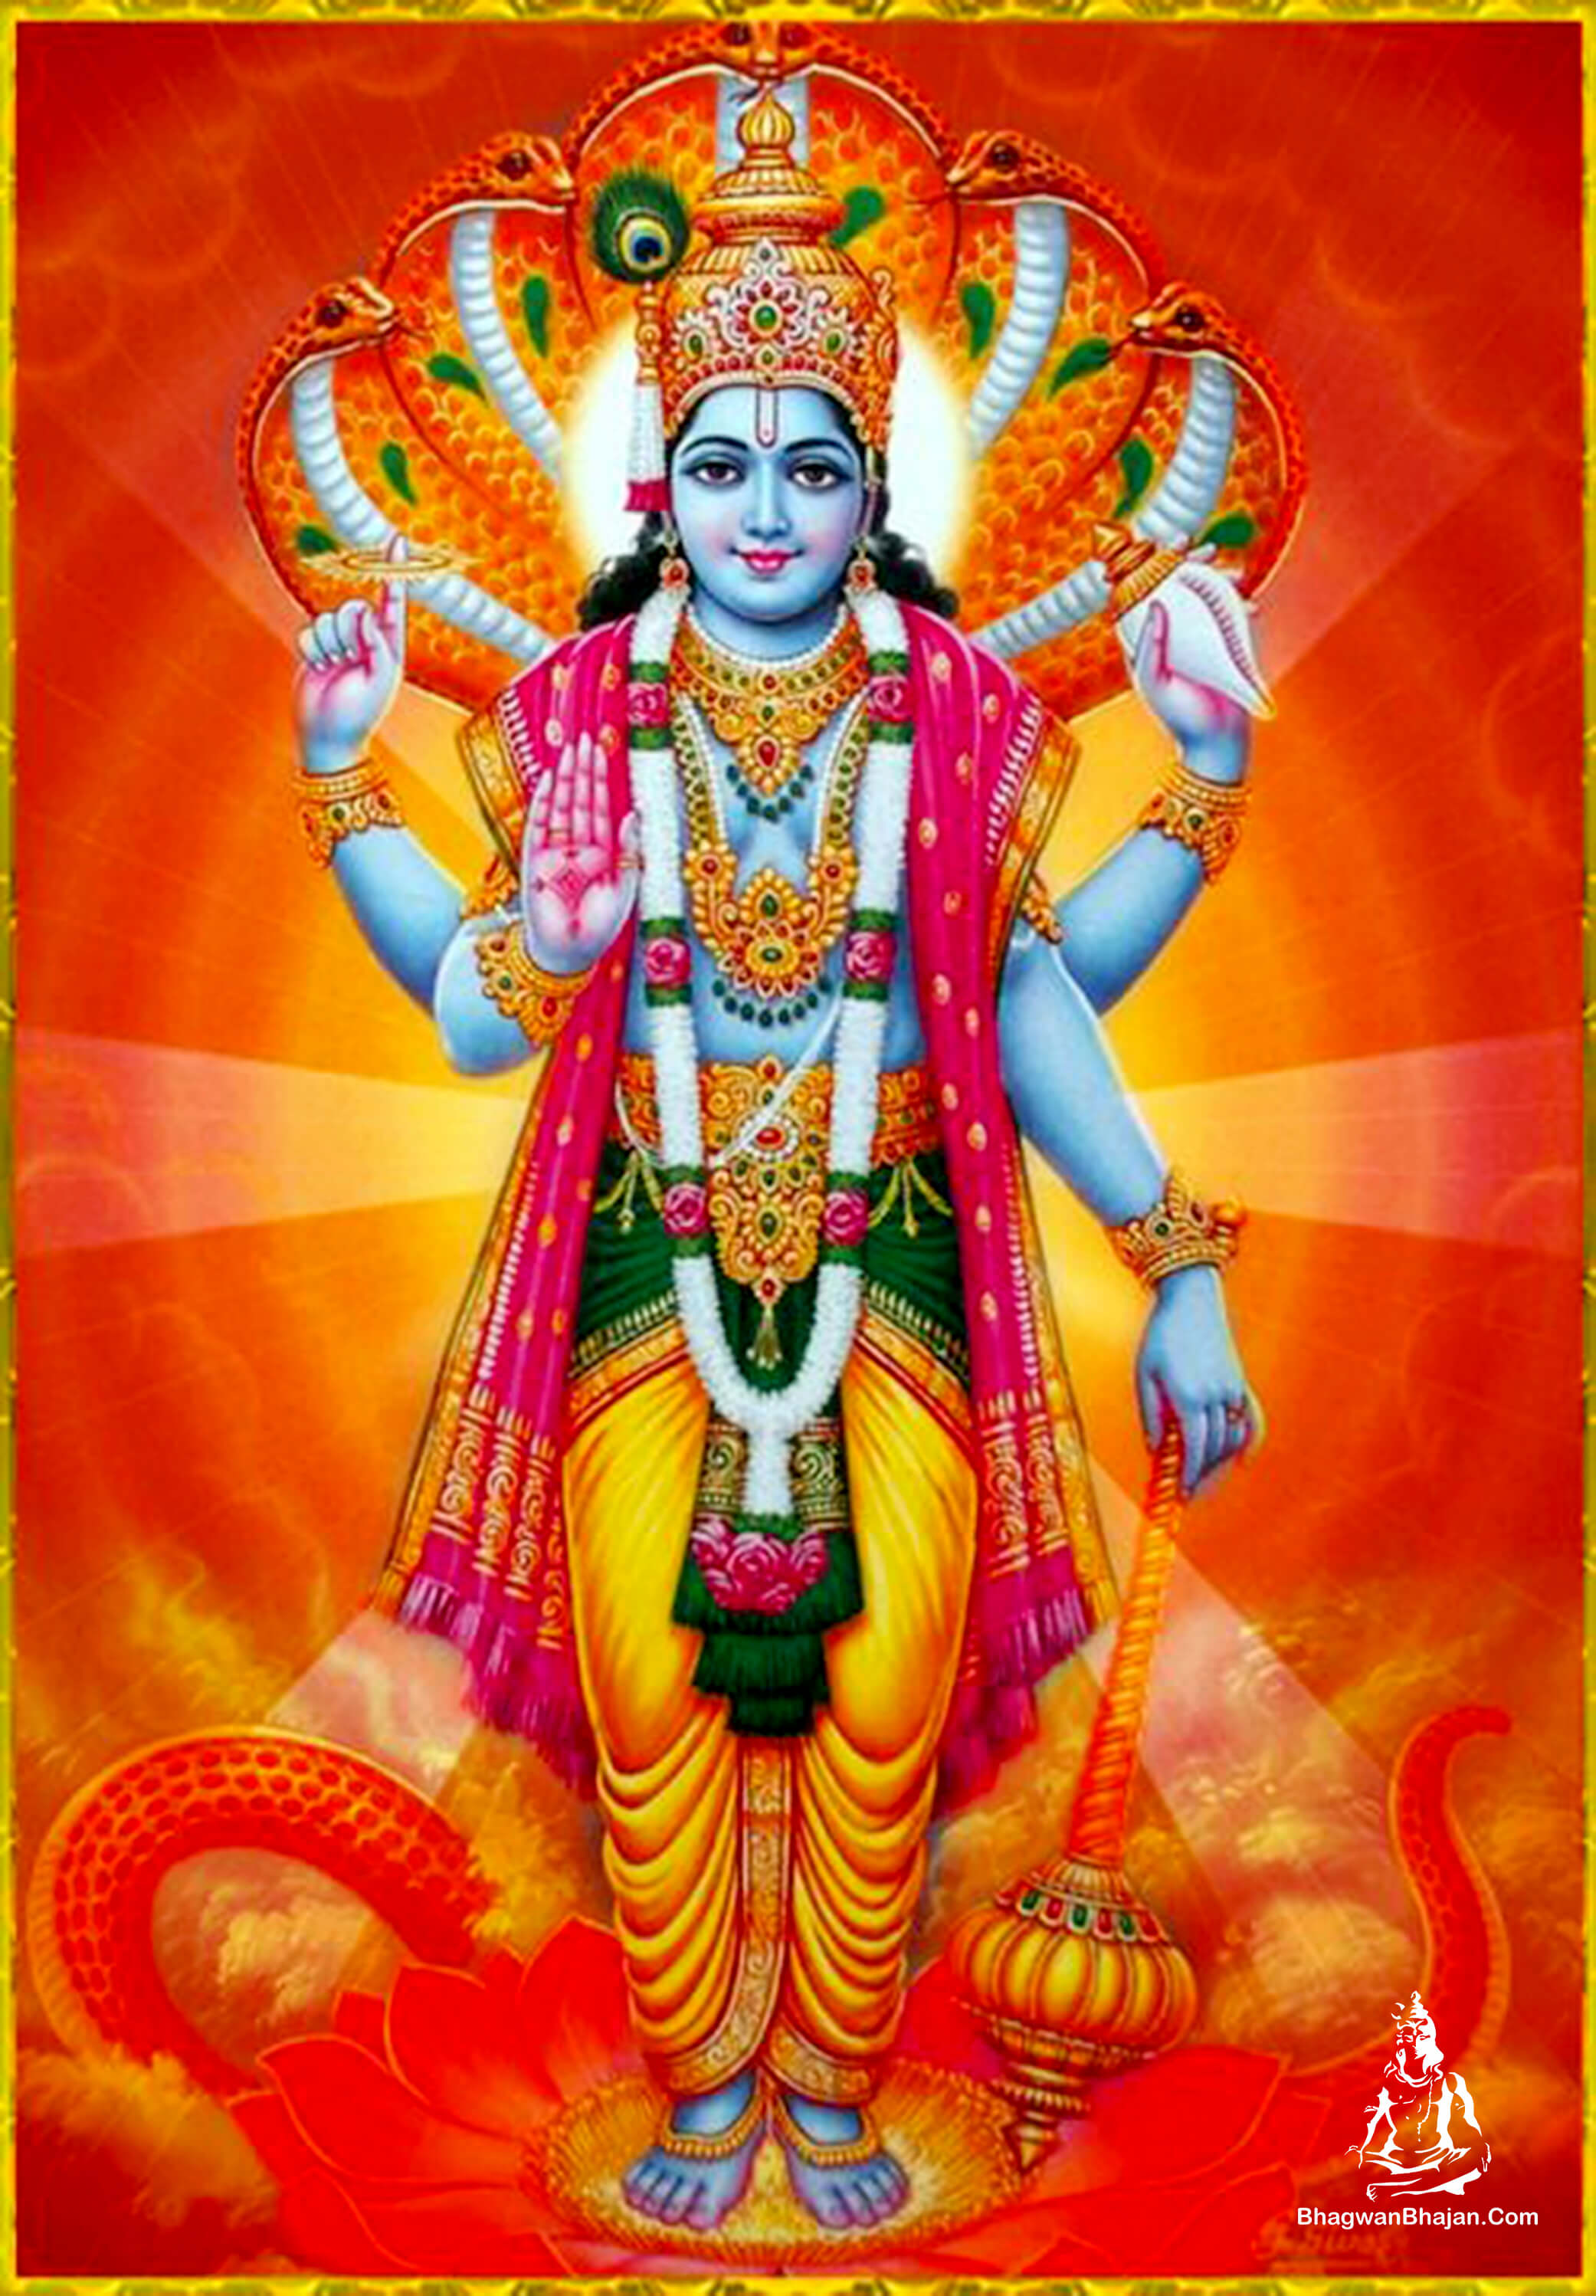 Download Free HD Wallpapers & Images of Bhagwan Vishnu ...